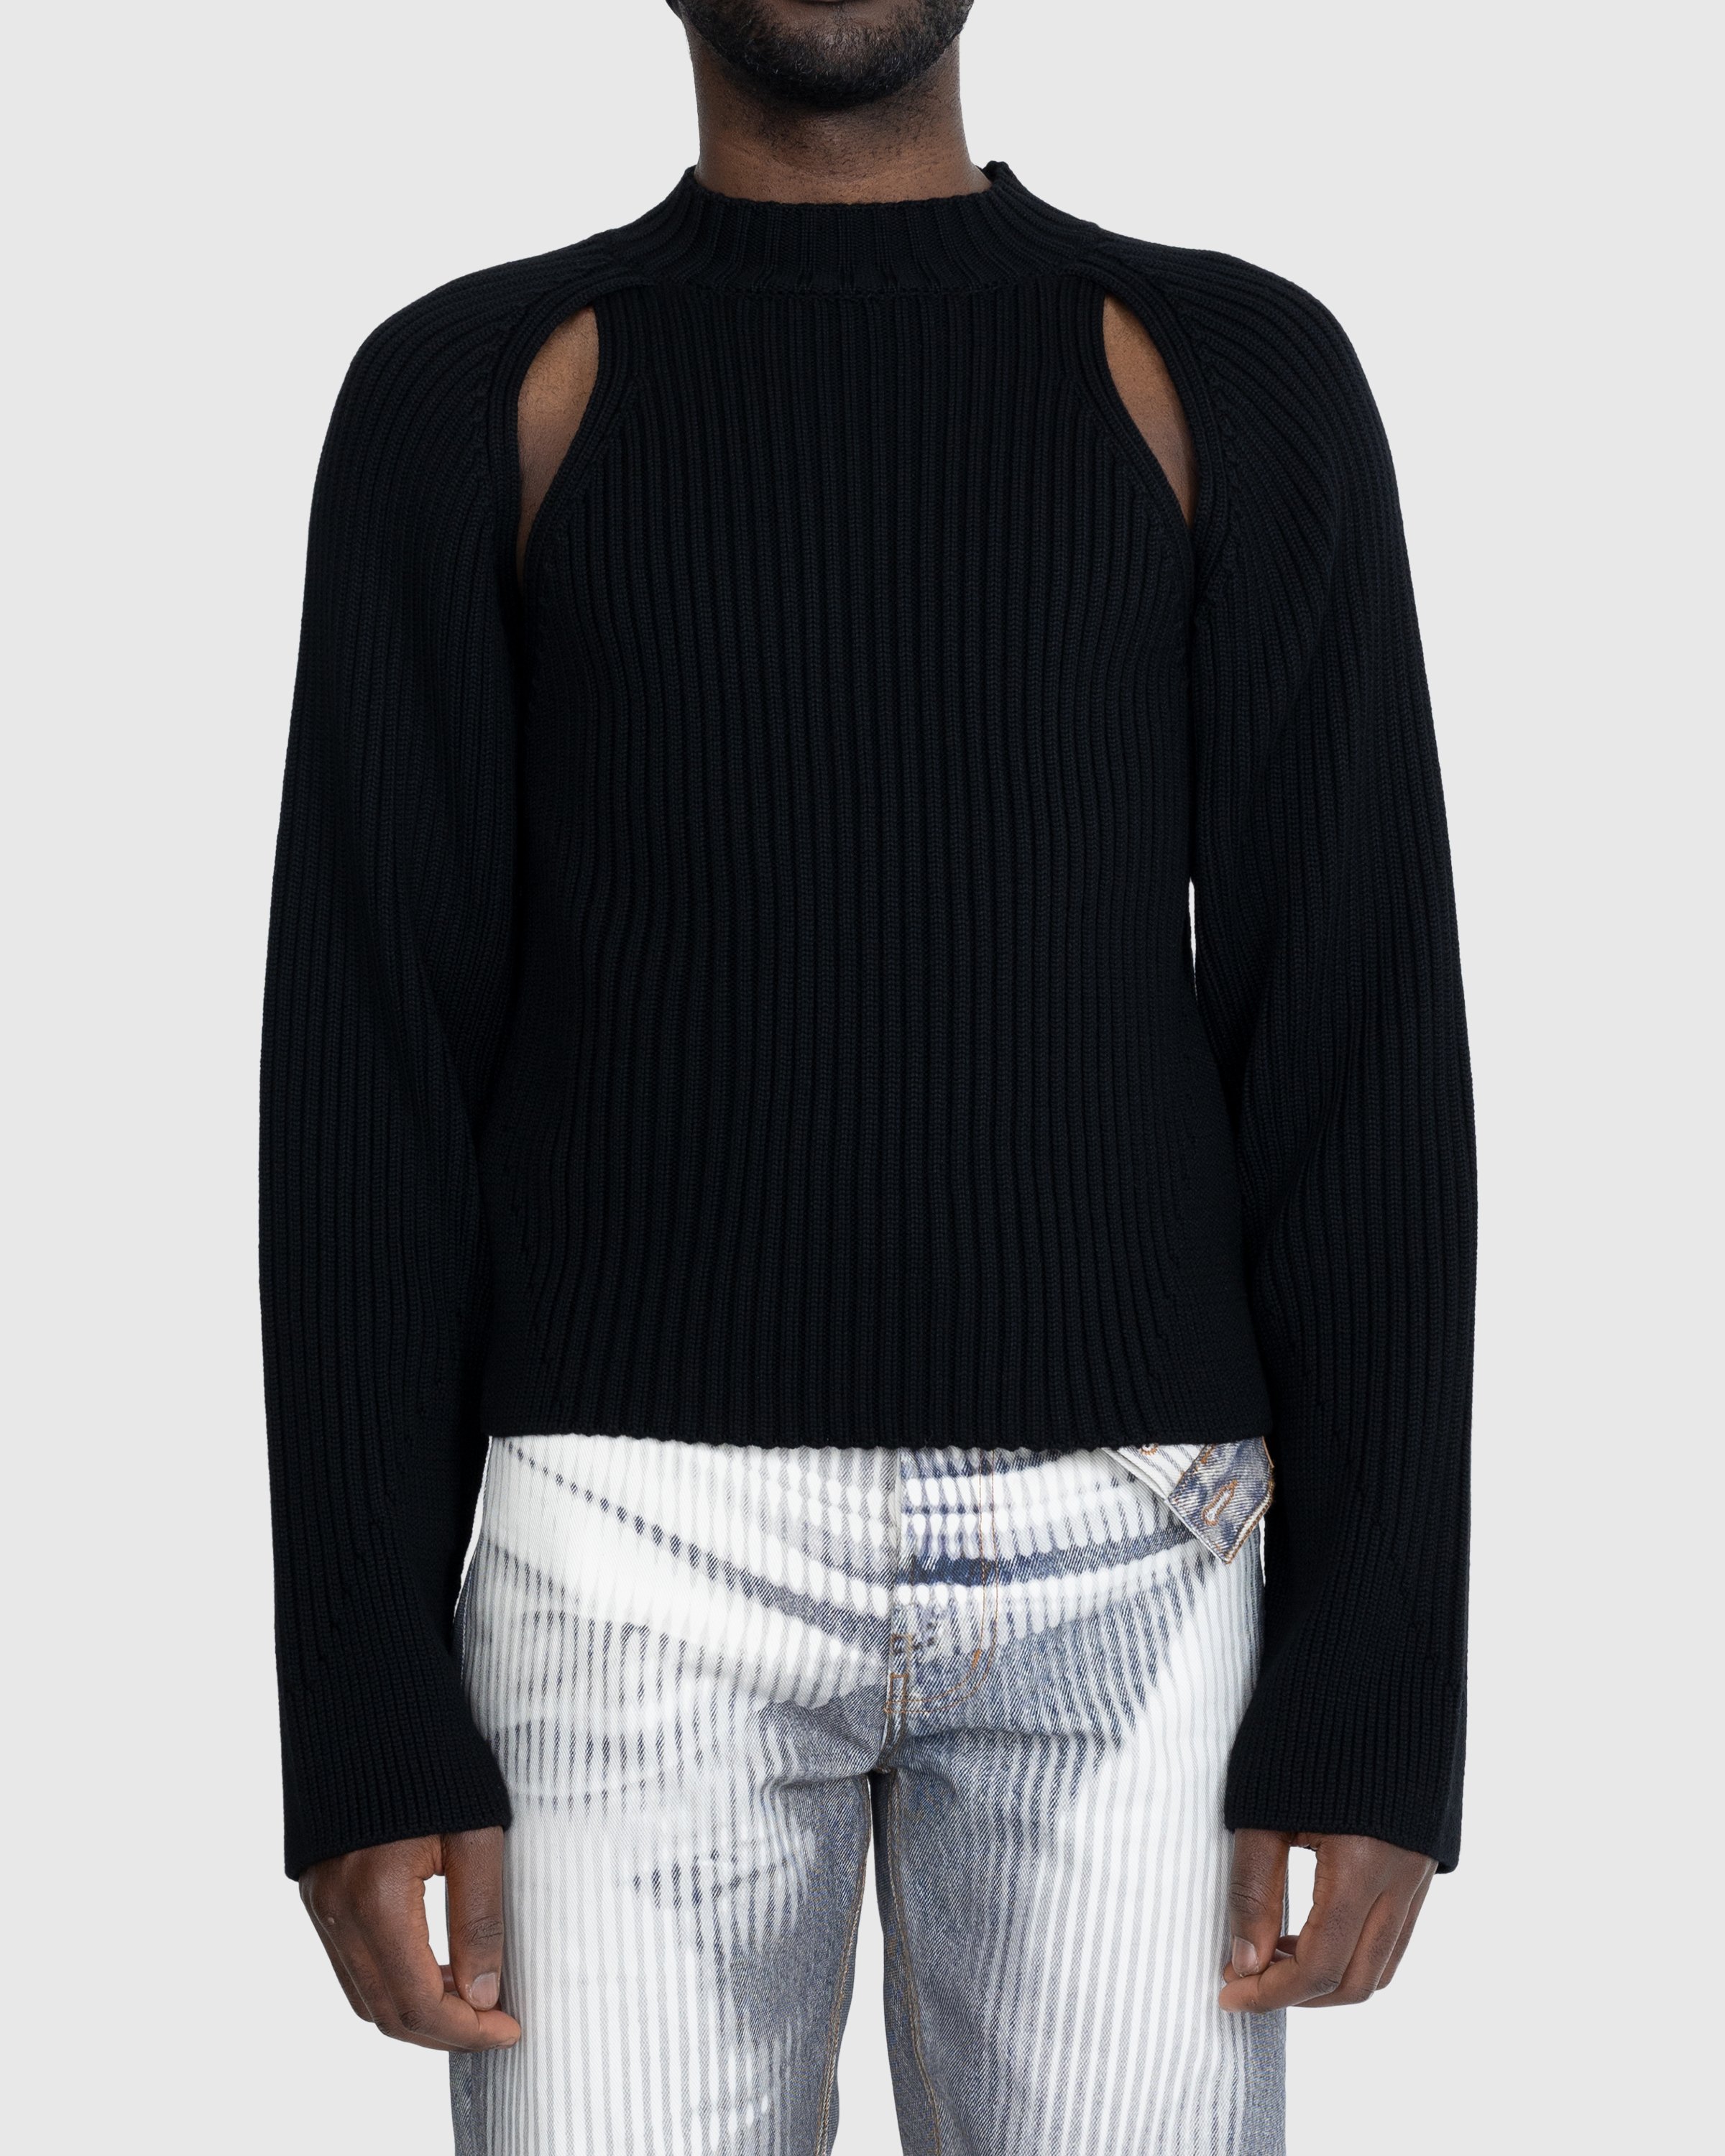 Jean Paul Gaultier - Oversized Sweater - Clothing - Black - Image 2